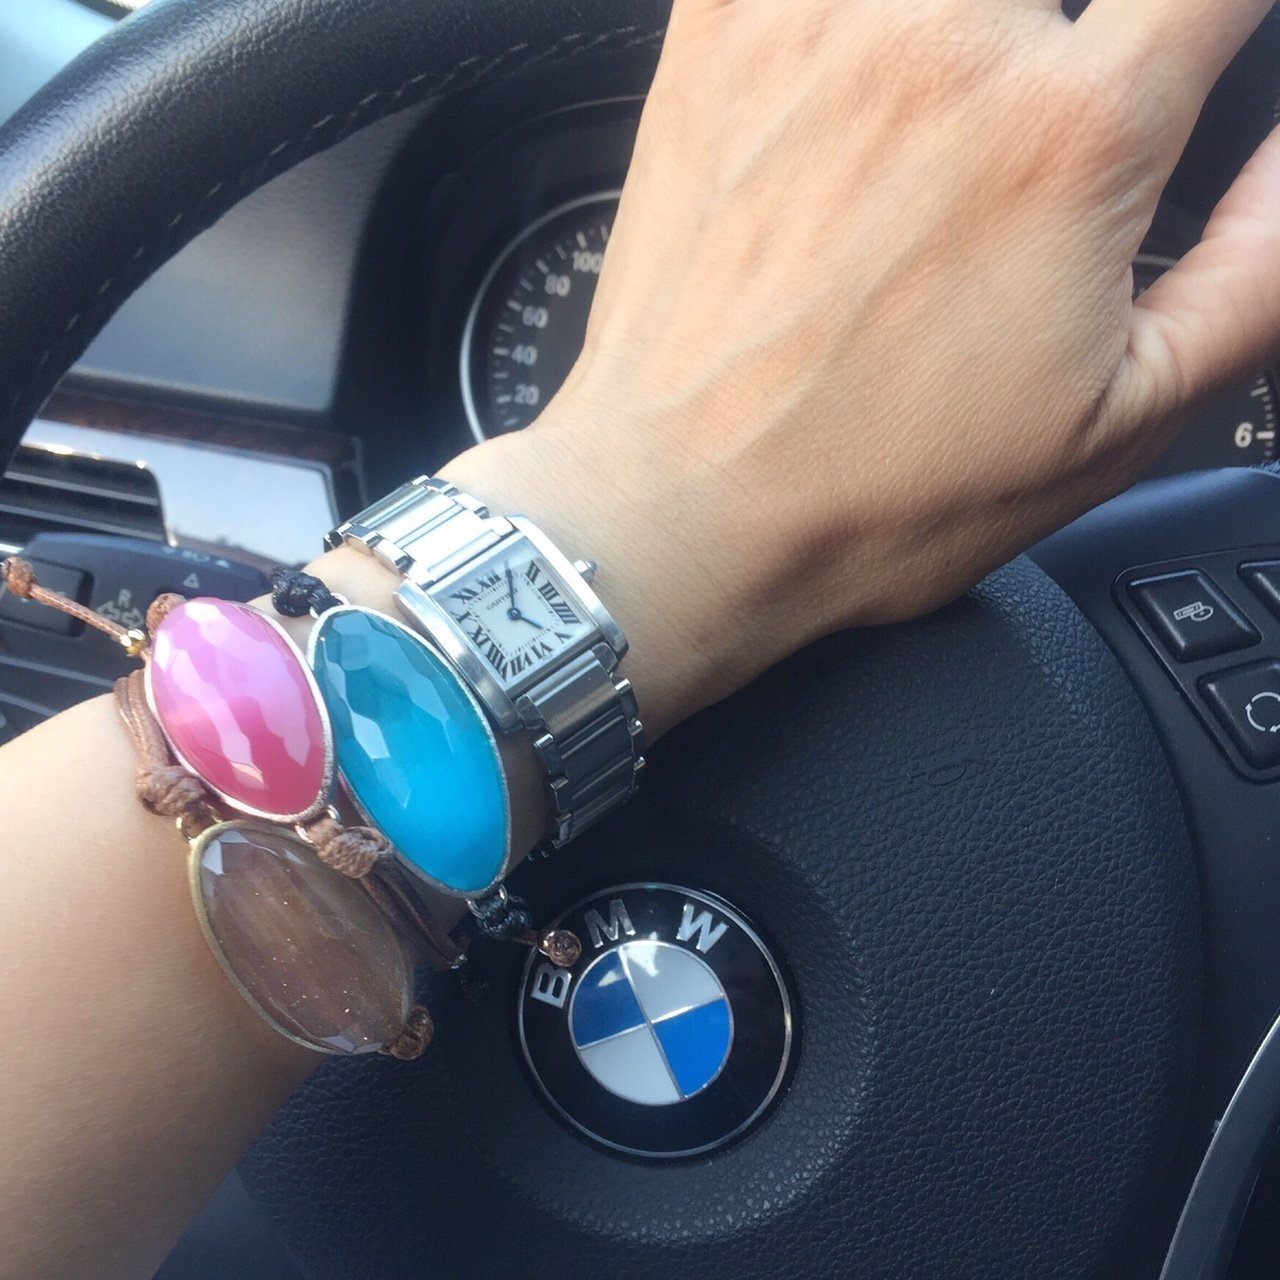 Bracelet - Dress For Success Vancouver | Values Bracelets on wrist while driving